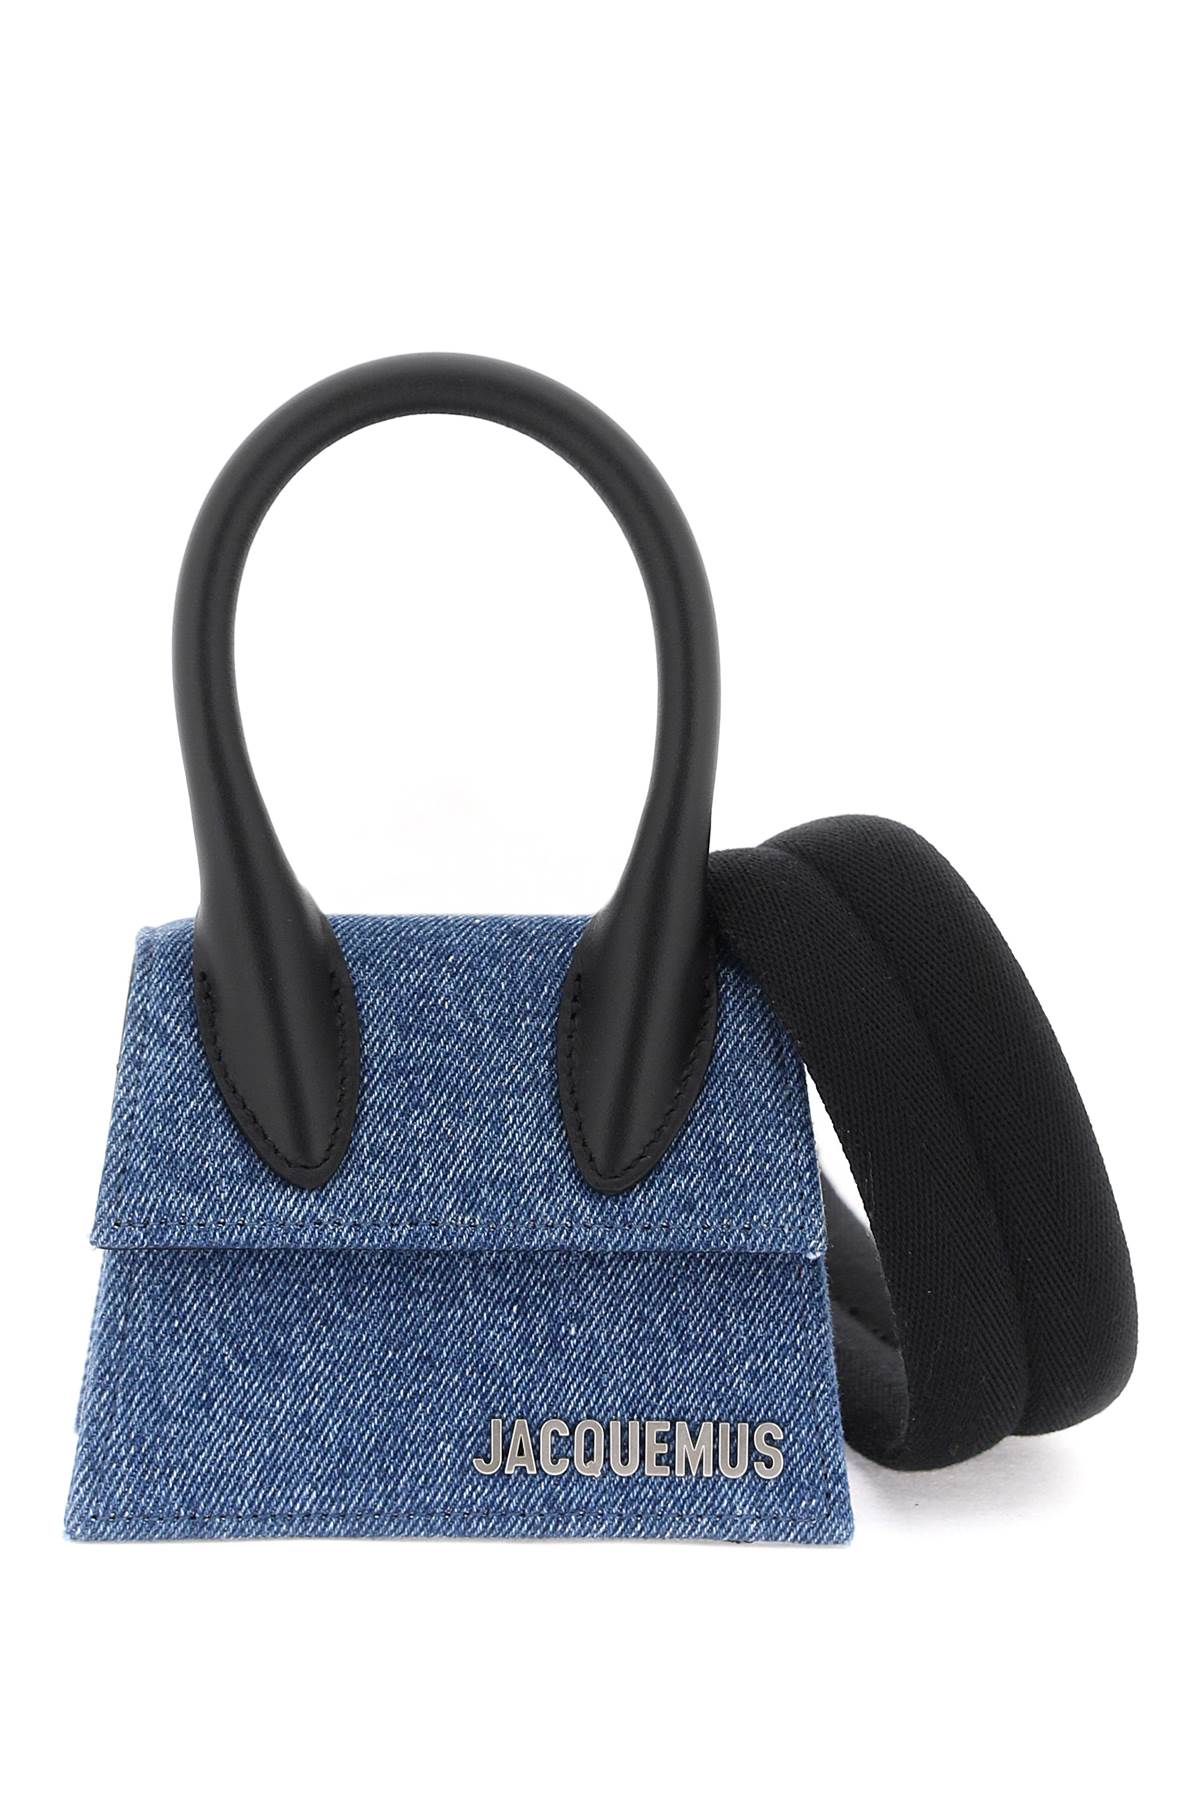 Jacquemus 'le chiquito' mini bag-0